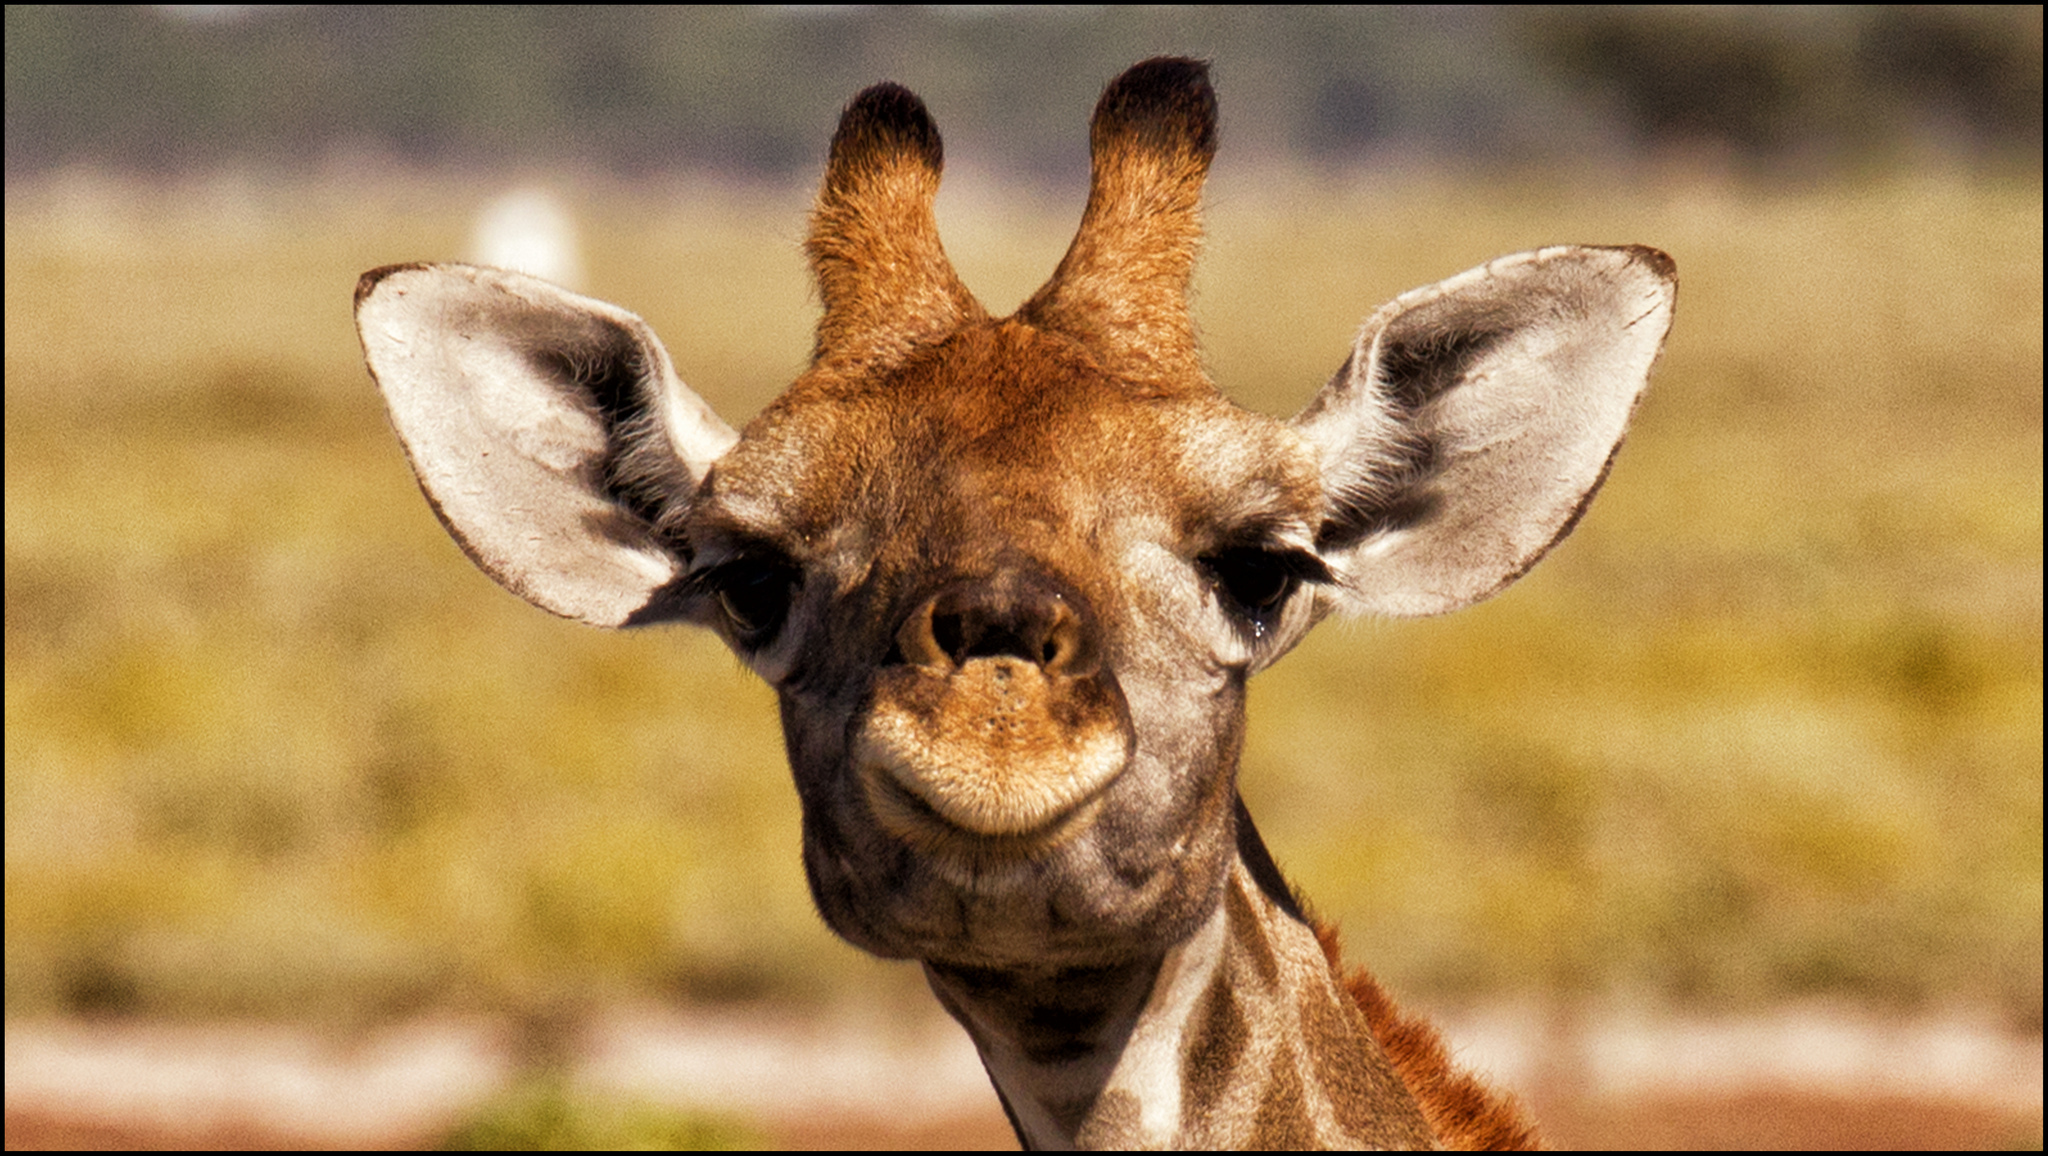 Giraffe HD Wallpaper and Background Image